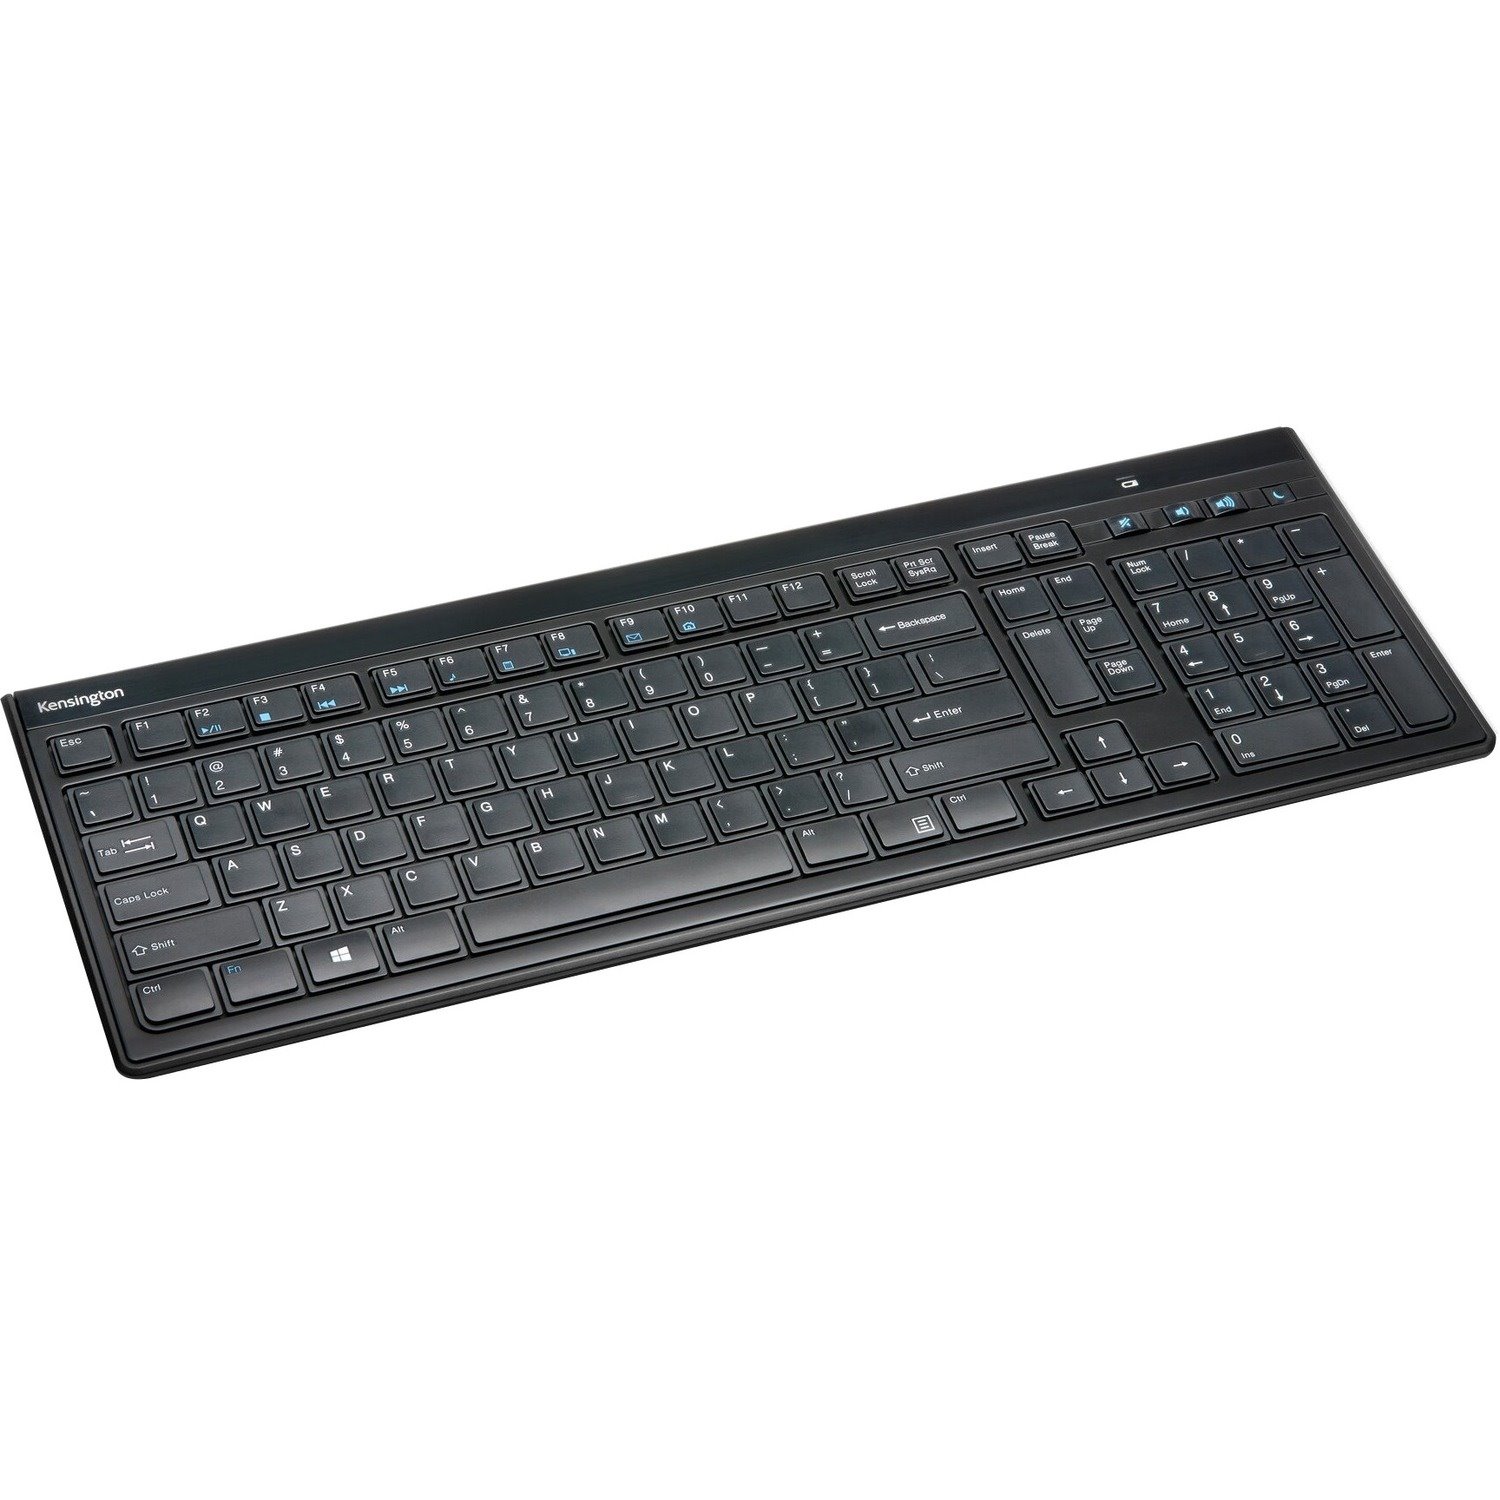 Kensington Advance Fit Keyboard - Wireless Connectivity - USB Interface - English (UK) - Black